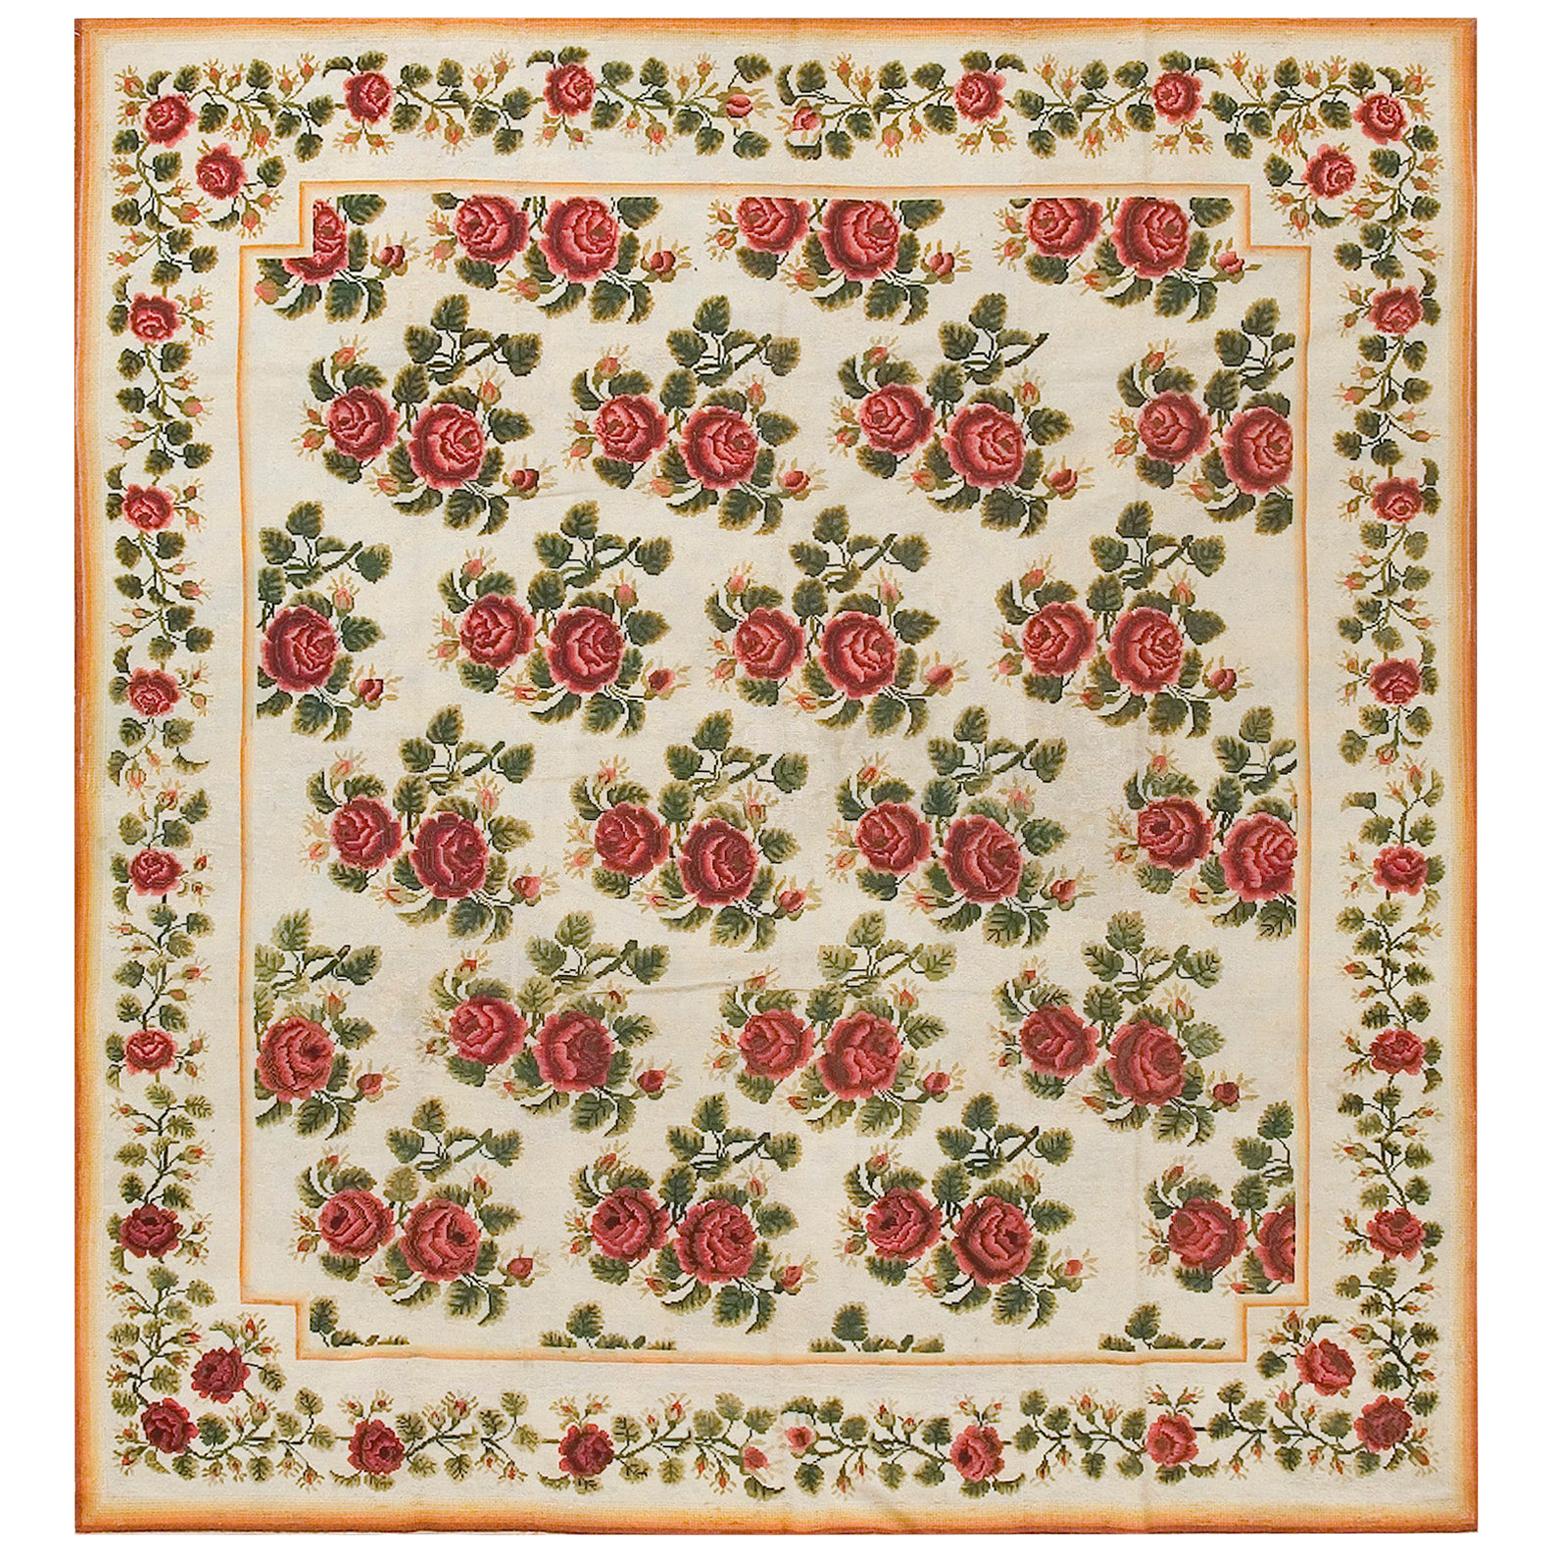 19th Century English Needlepoint Carpet ( 6'10" x 7'6" - 208 x 230 )